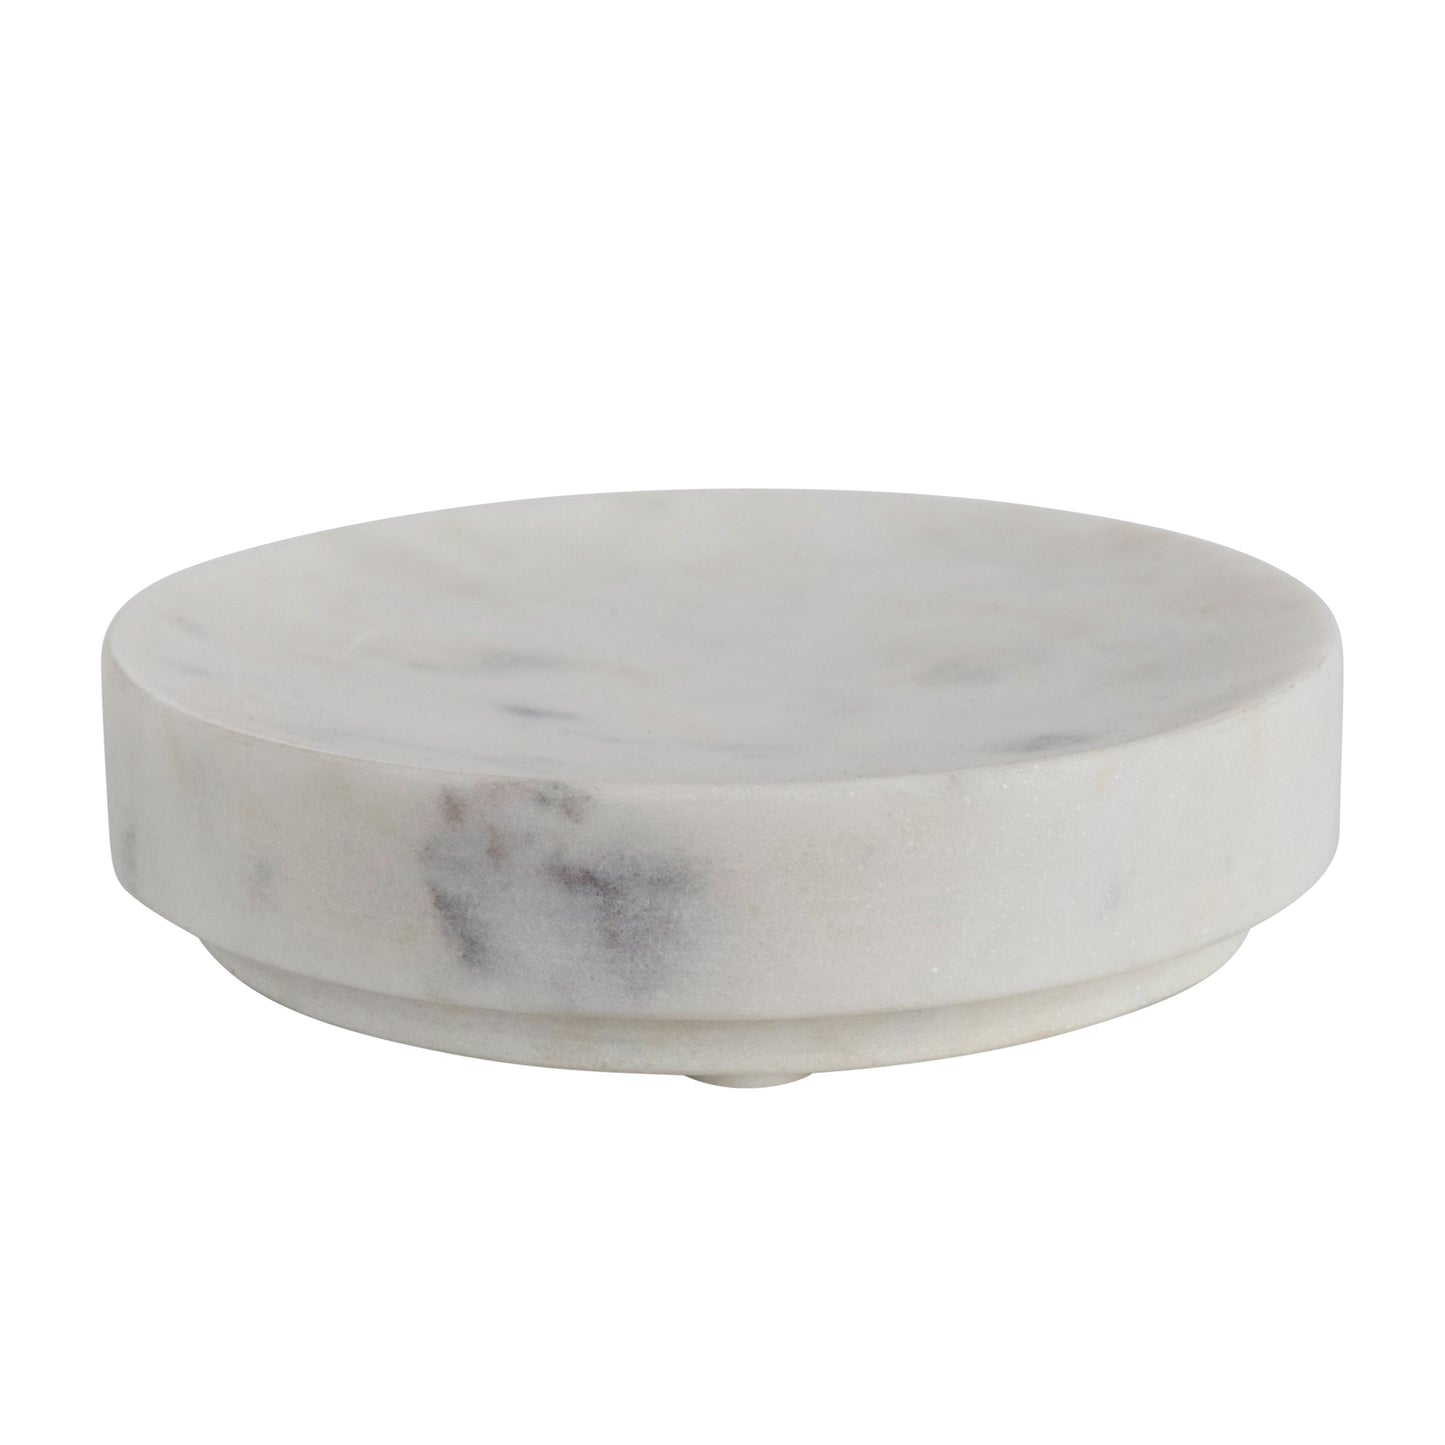 5" Round White Marble Soap Dish